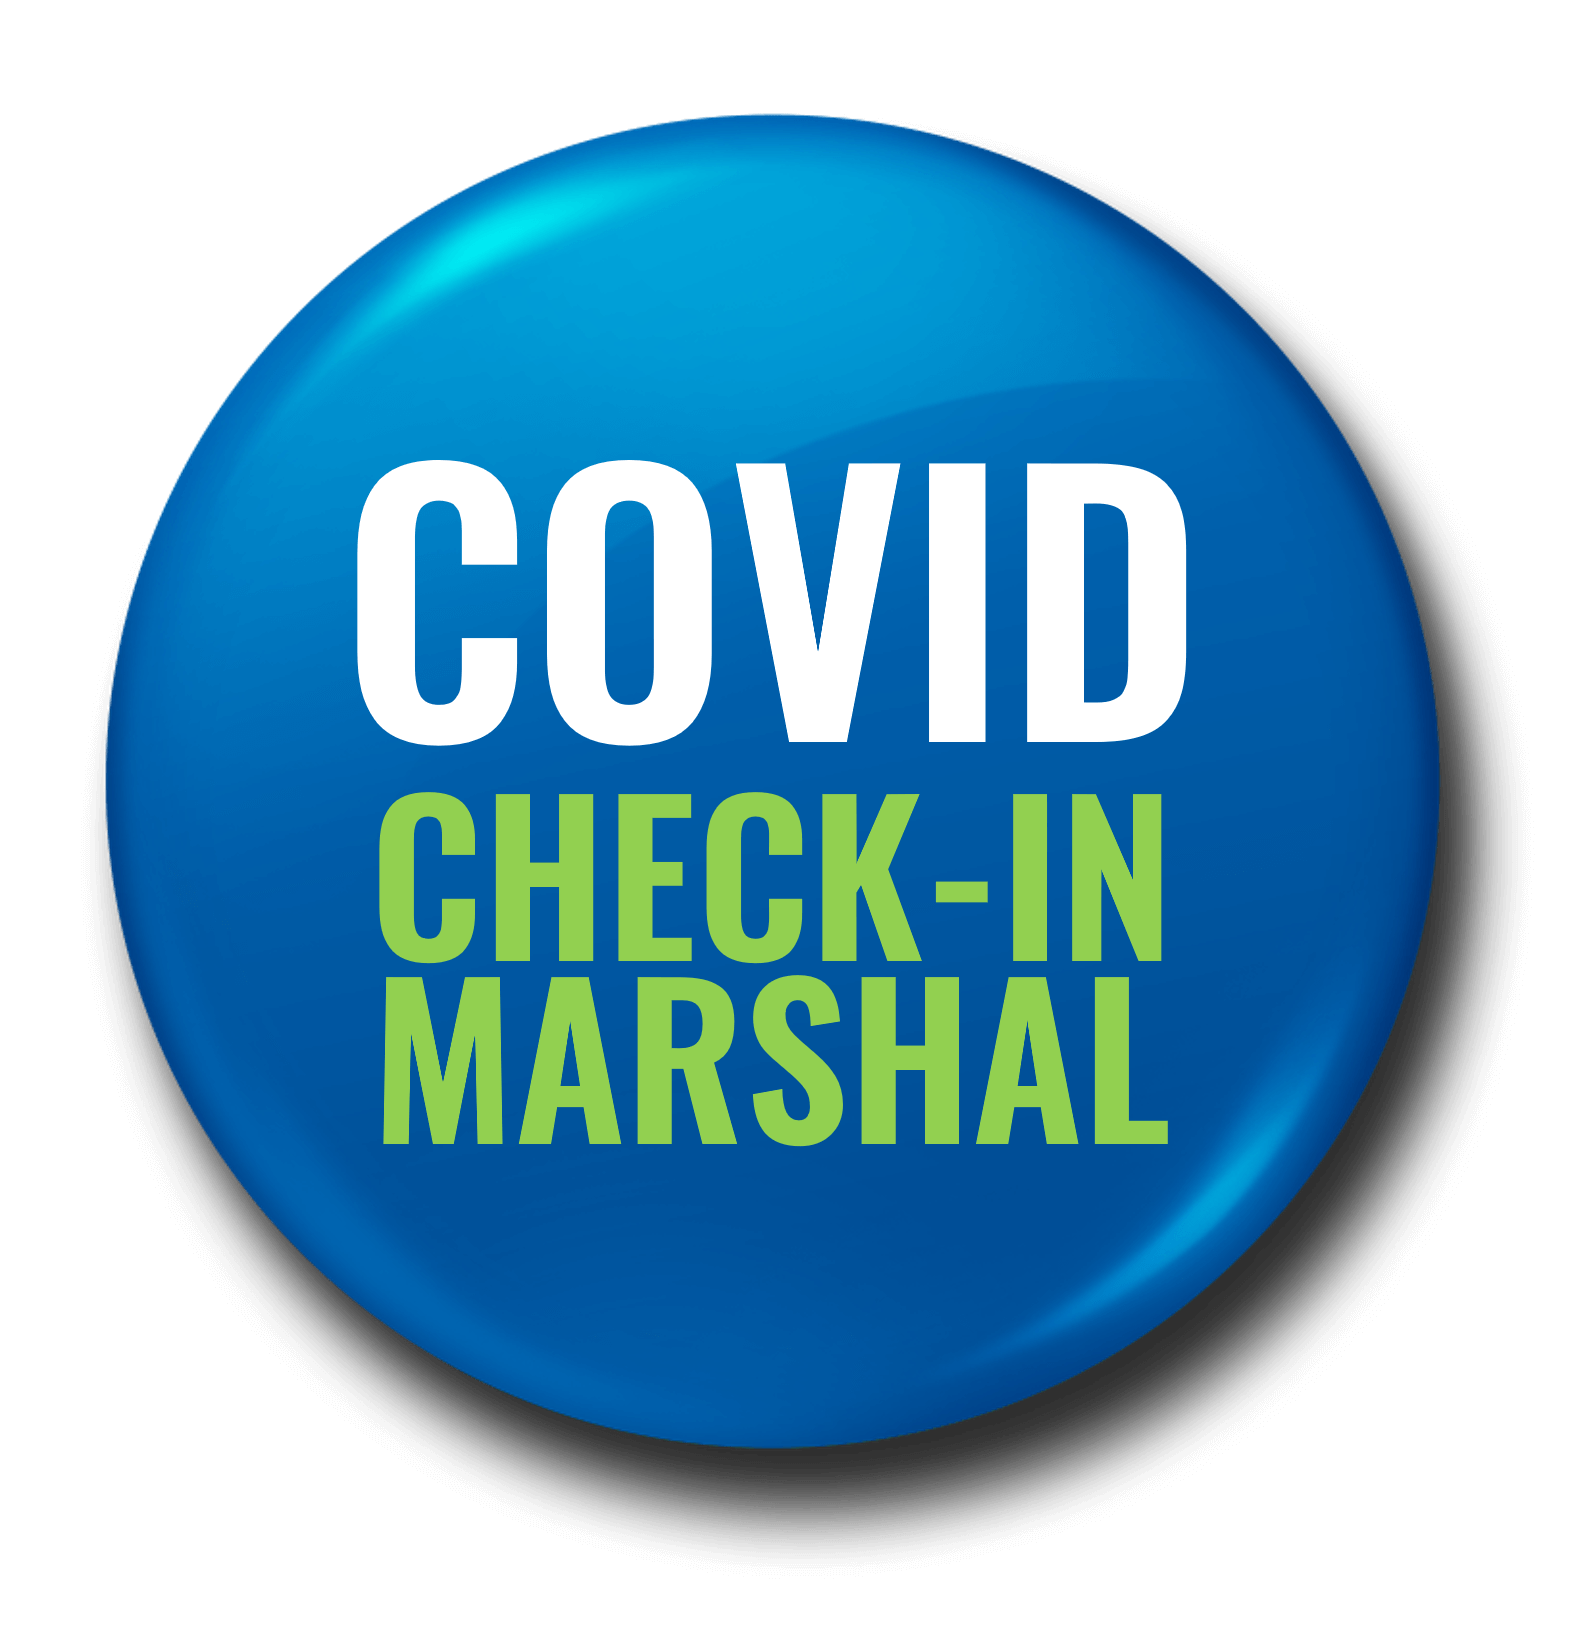 COVID Check In Marshal Badges | Australia